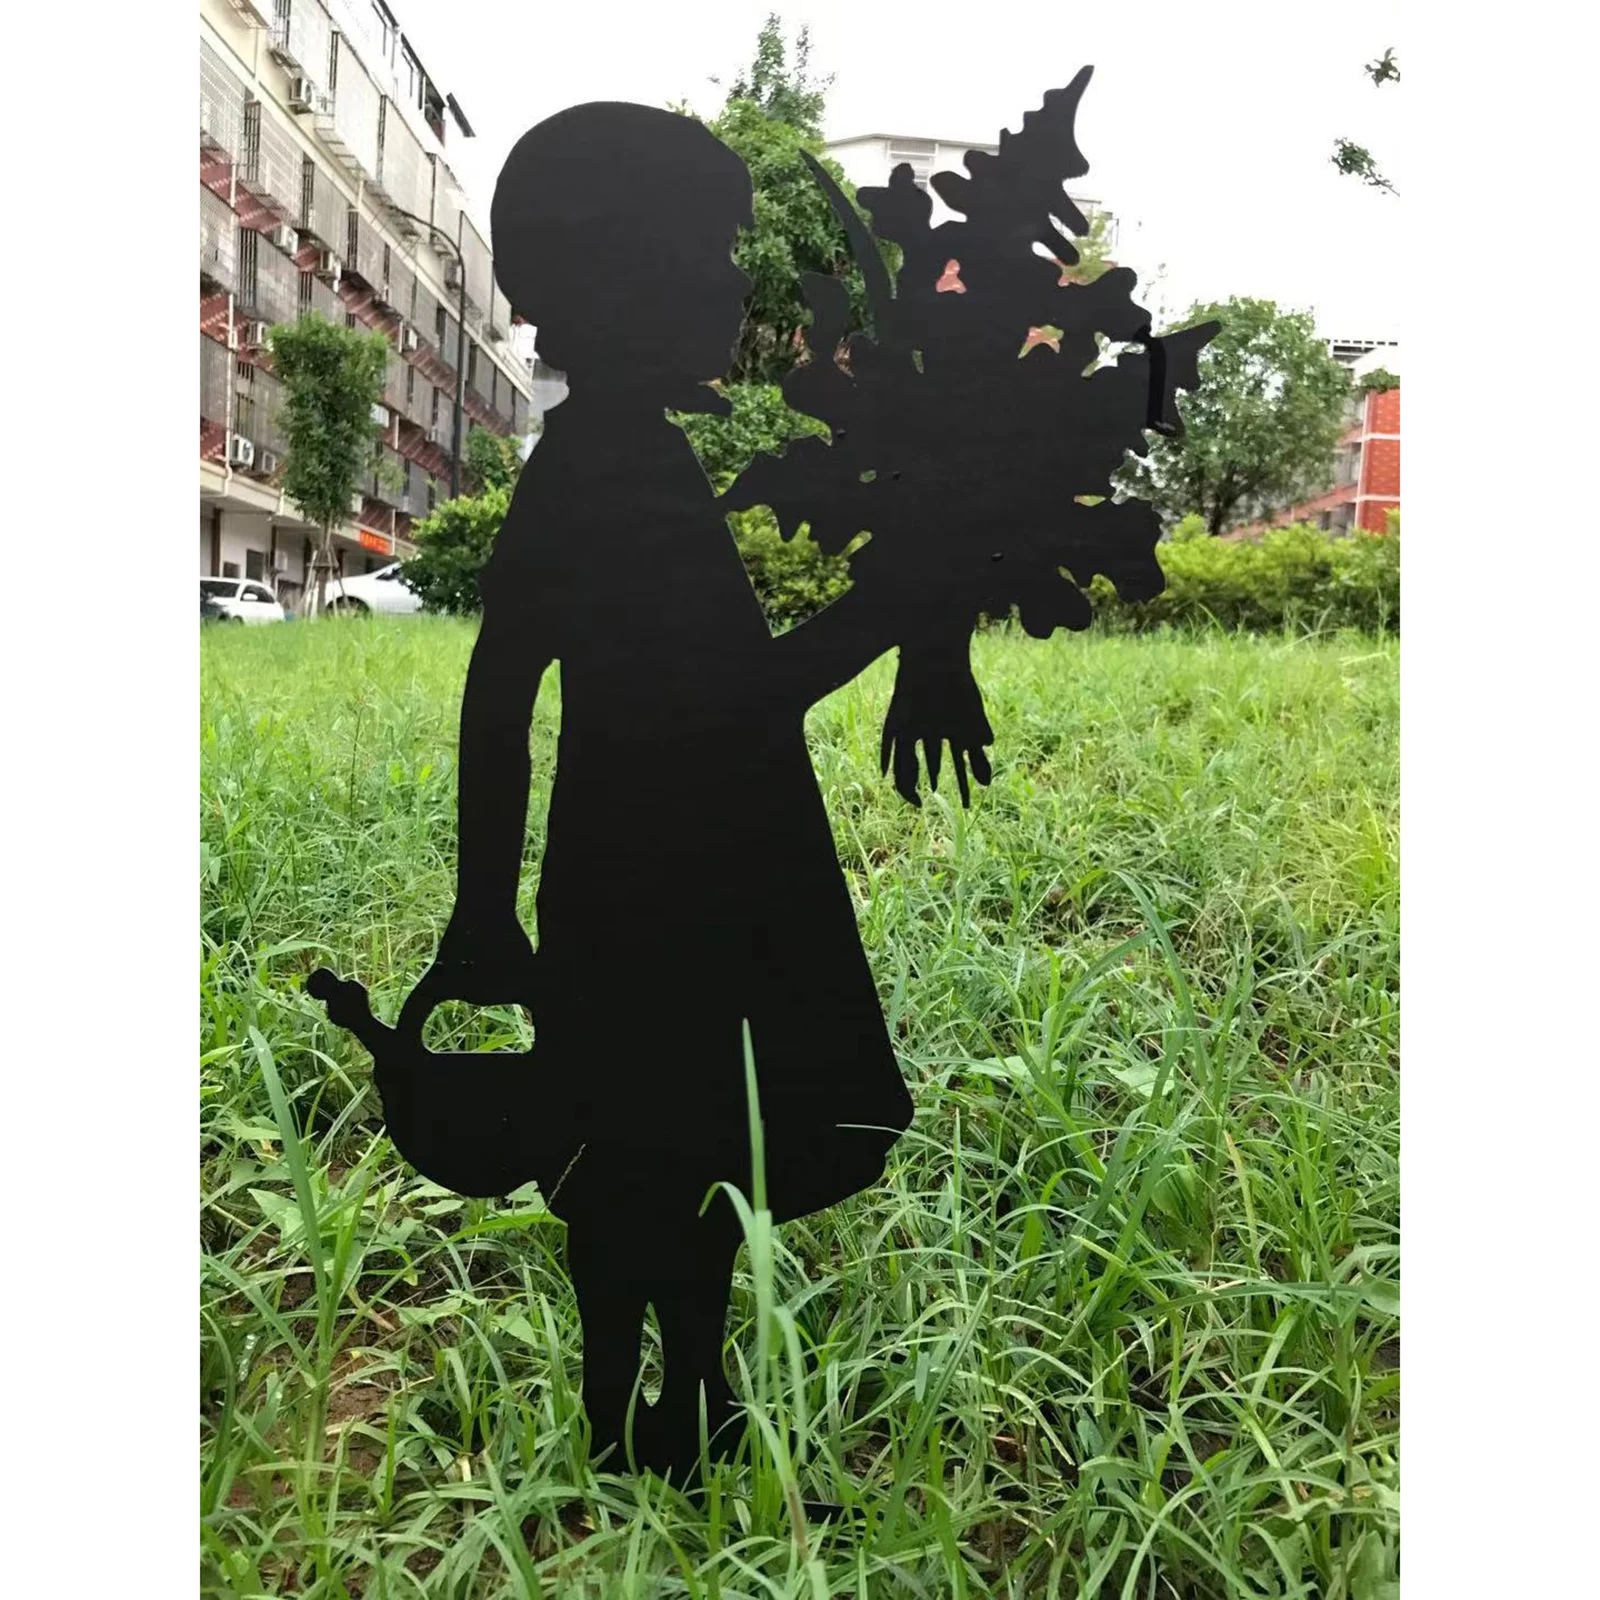 Cute Fairy Silhouette Metal Garden Stake Plant Flower Girl Stick Decor Gift